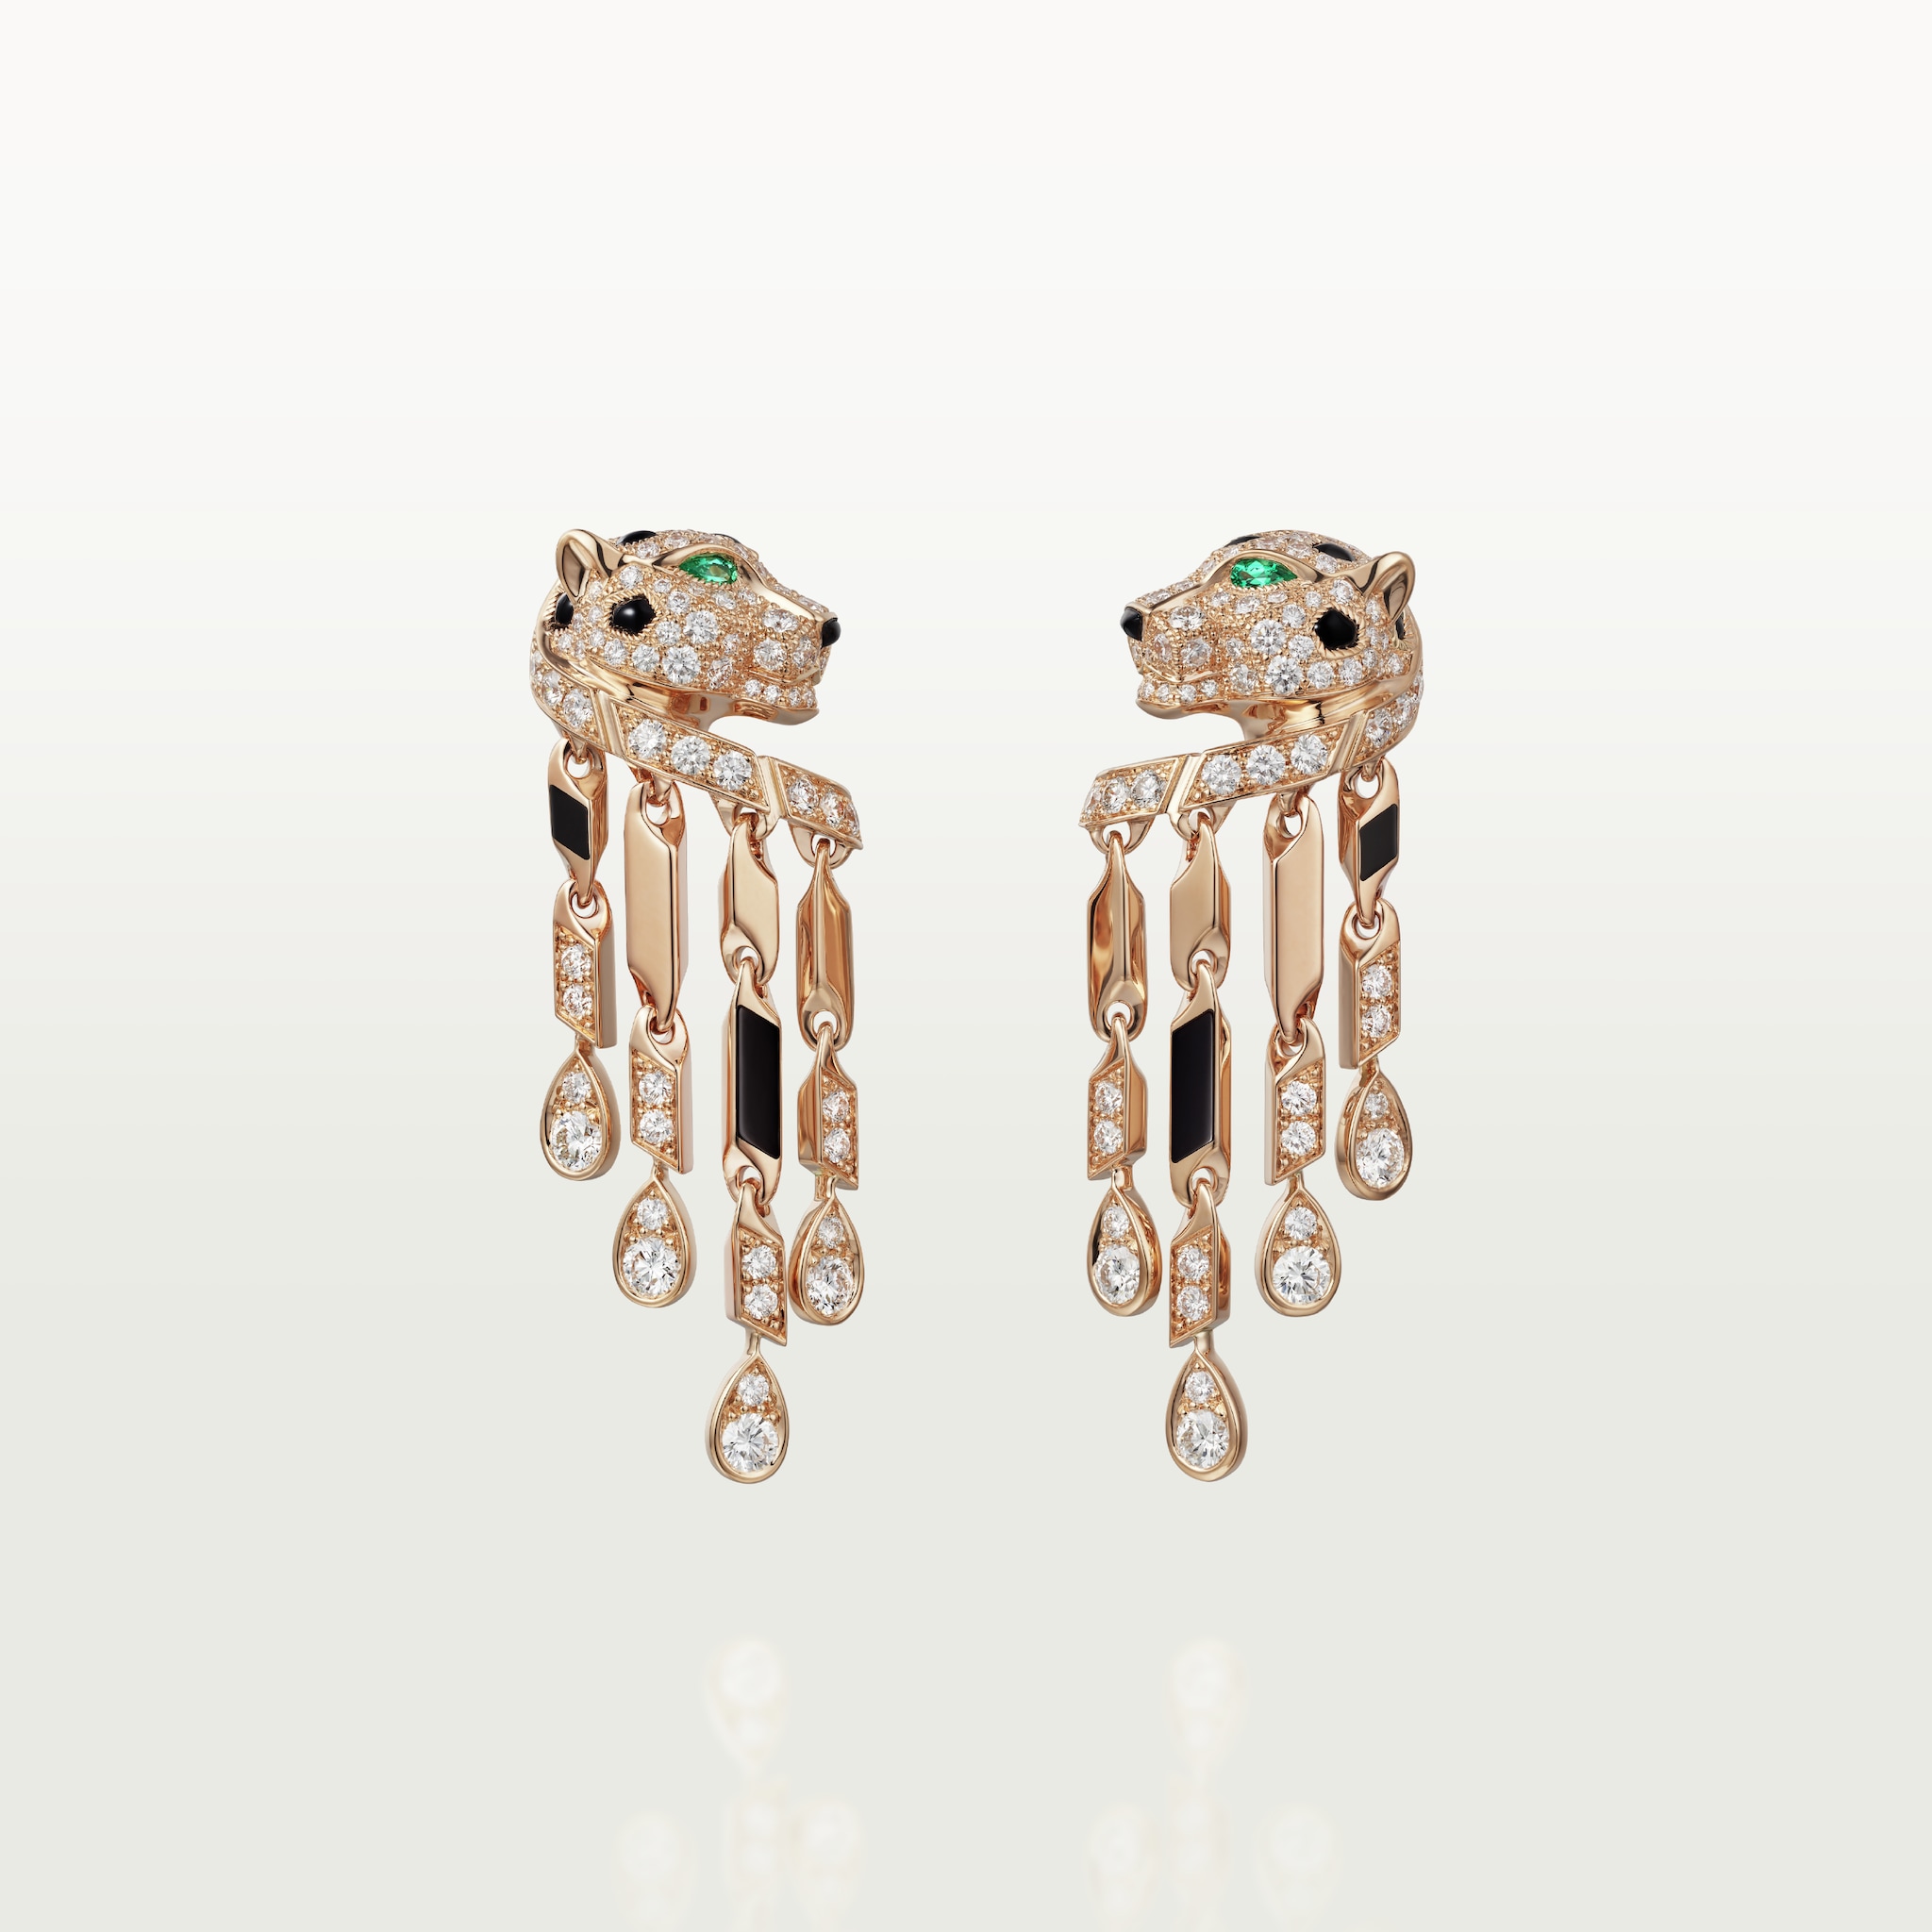 Panthère de Cartier earringsRose gold, onyx, emeralds, diamonds